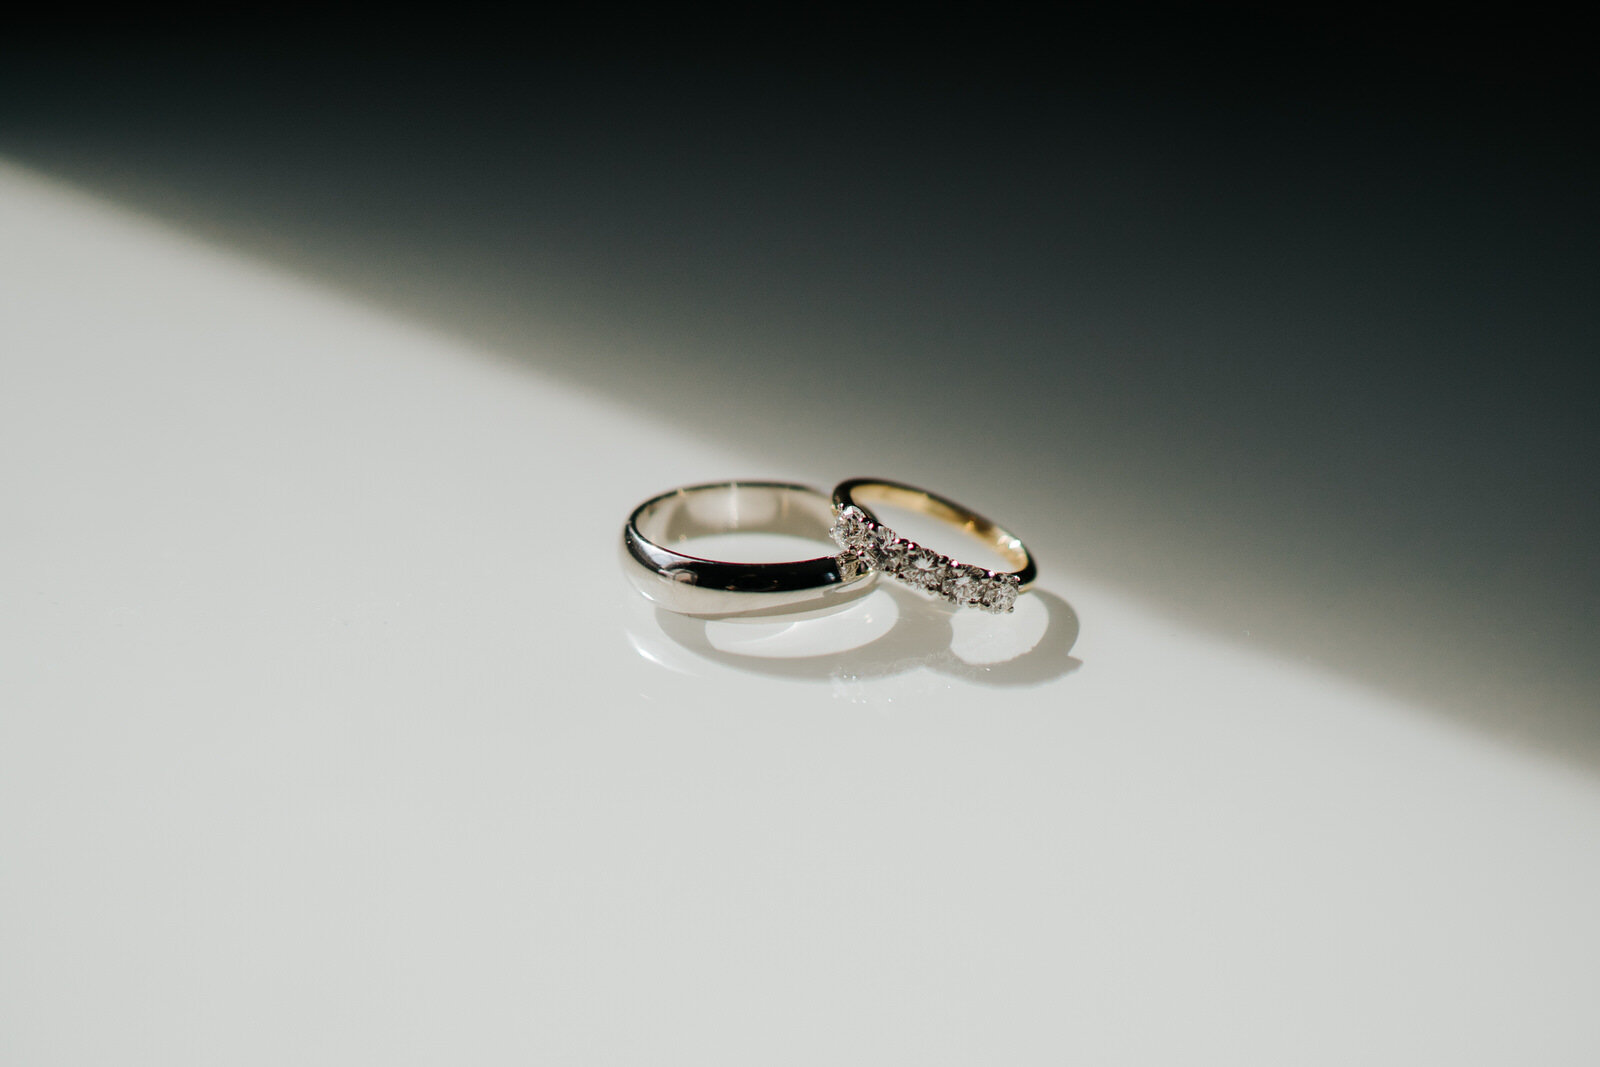 Close-up photograph of wedding rings before Richmond, Pembroke Lodge summer wedding